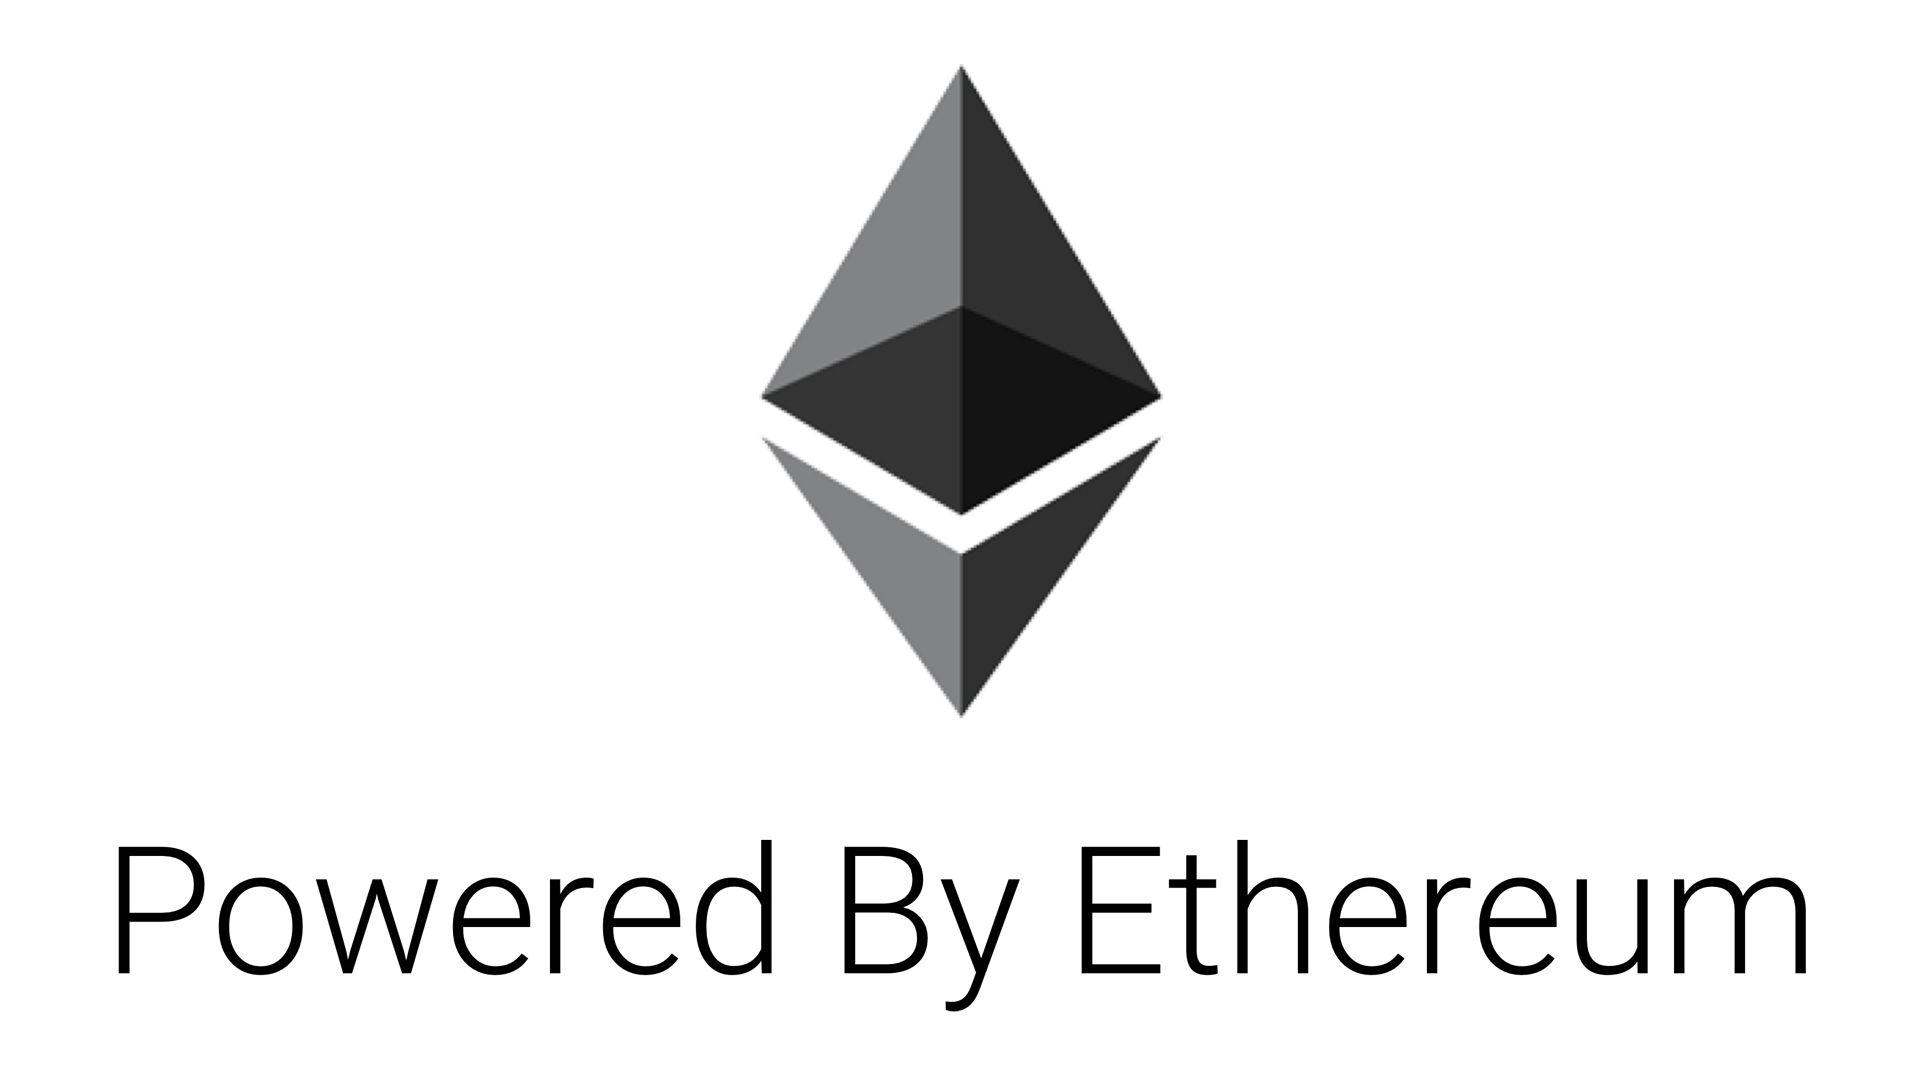 Ether Logo - Ethereum Logo, Ethereum Symbol, Meaning, History and Evolution